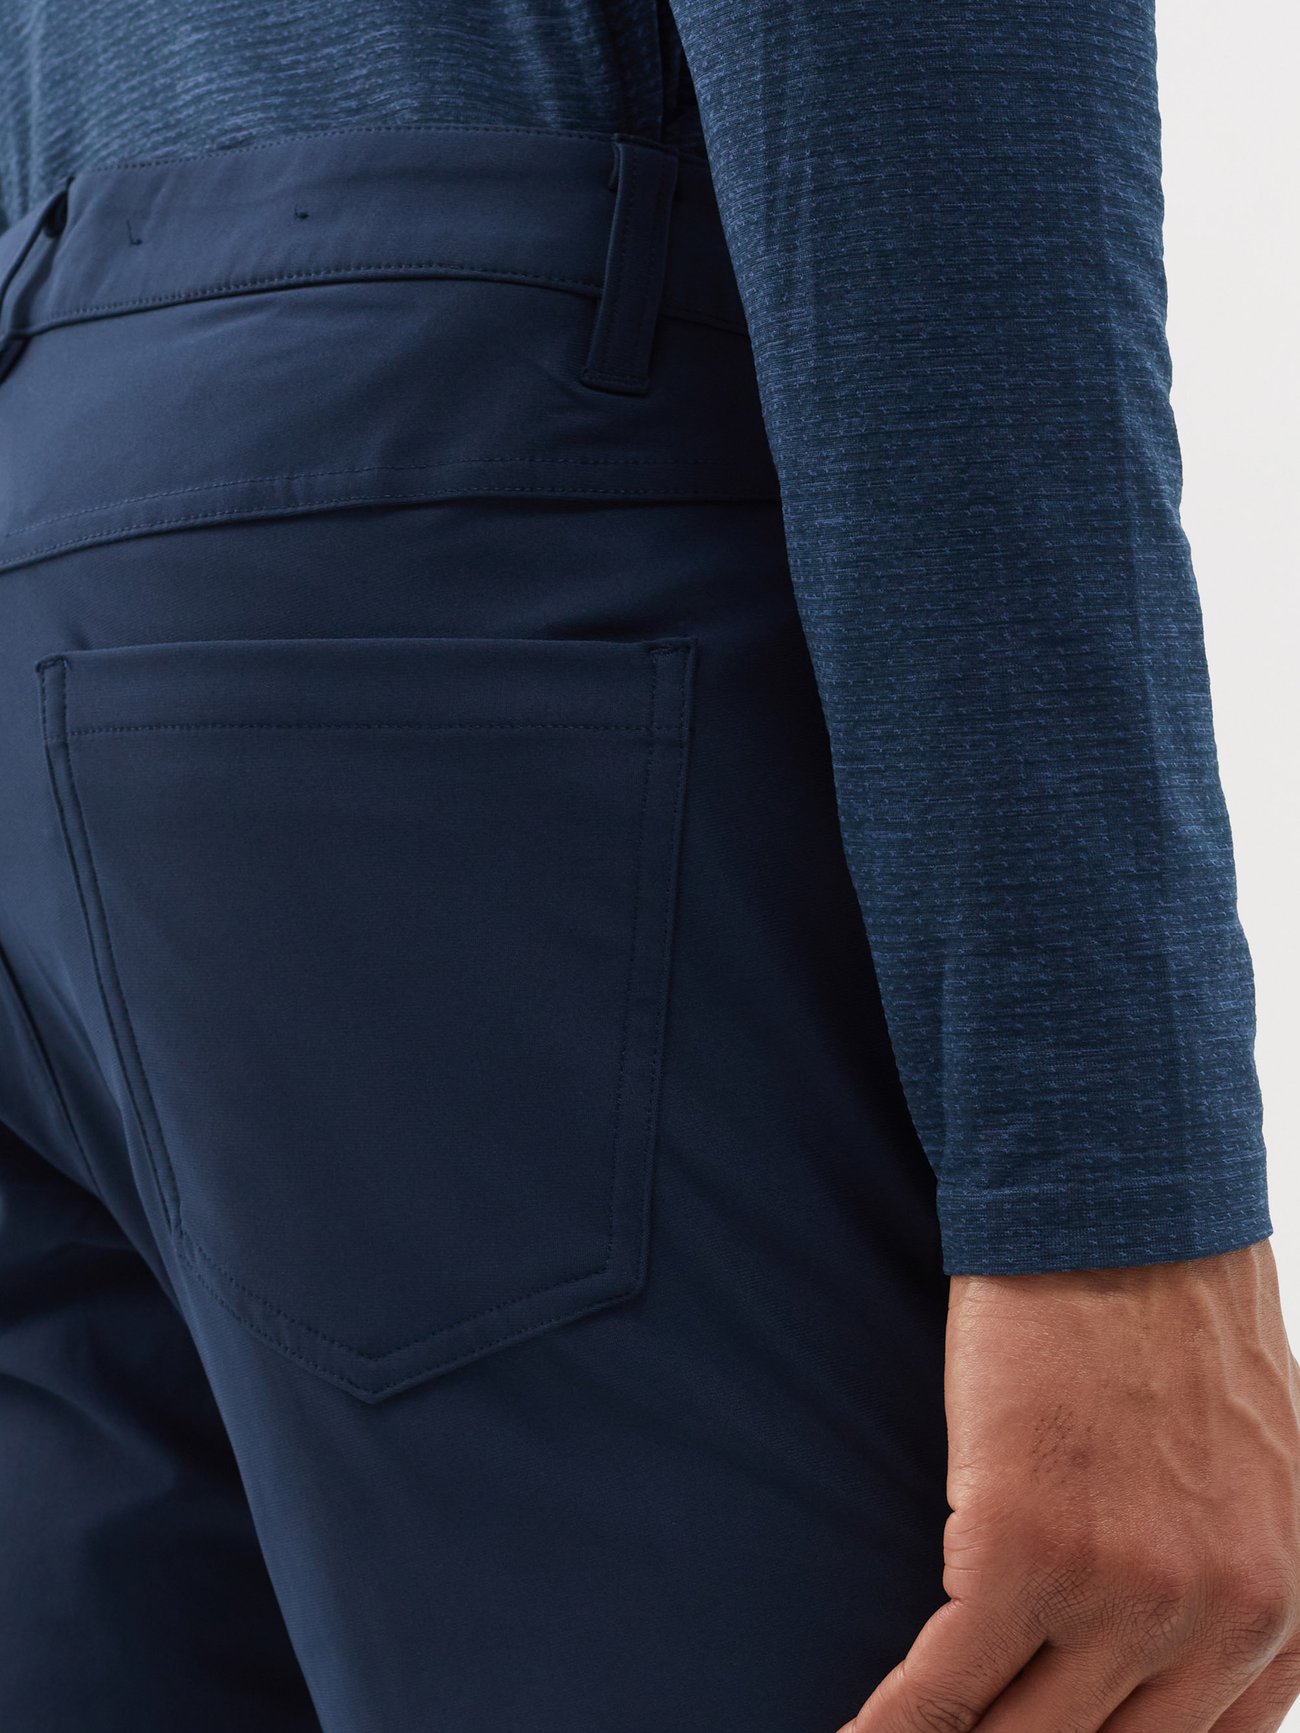 lululemon ABC Pant - Classic Fit - True Navy, Clothing